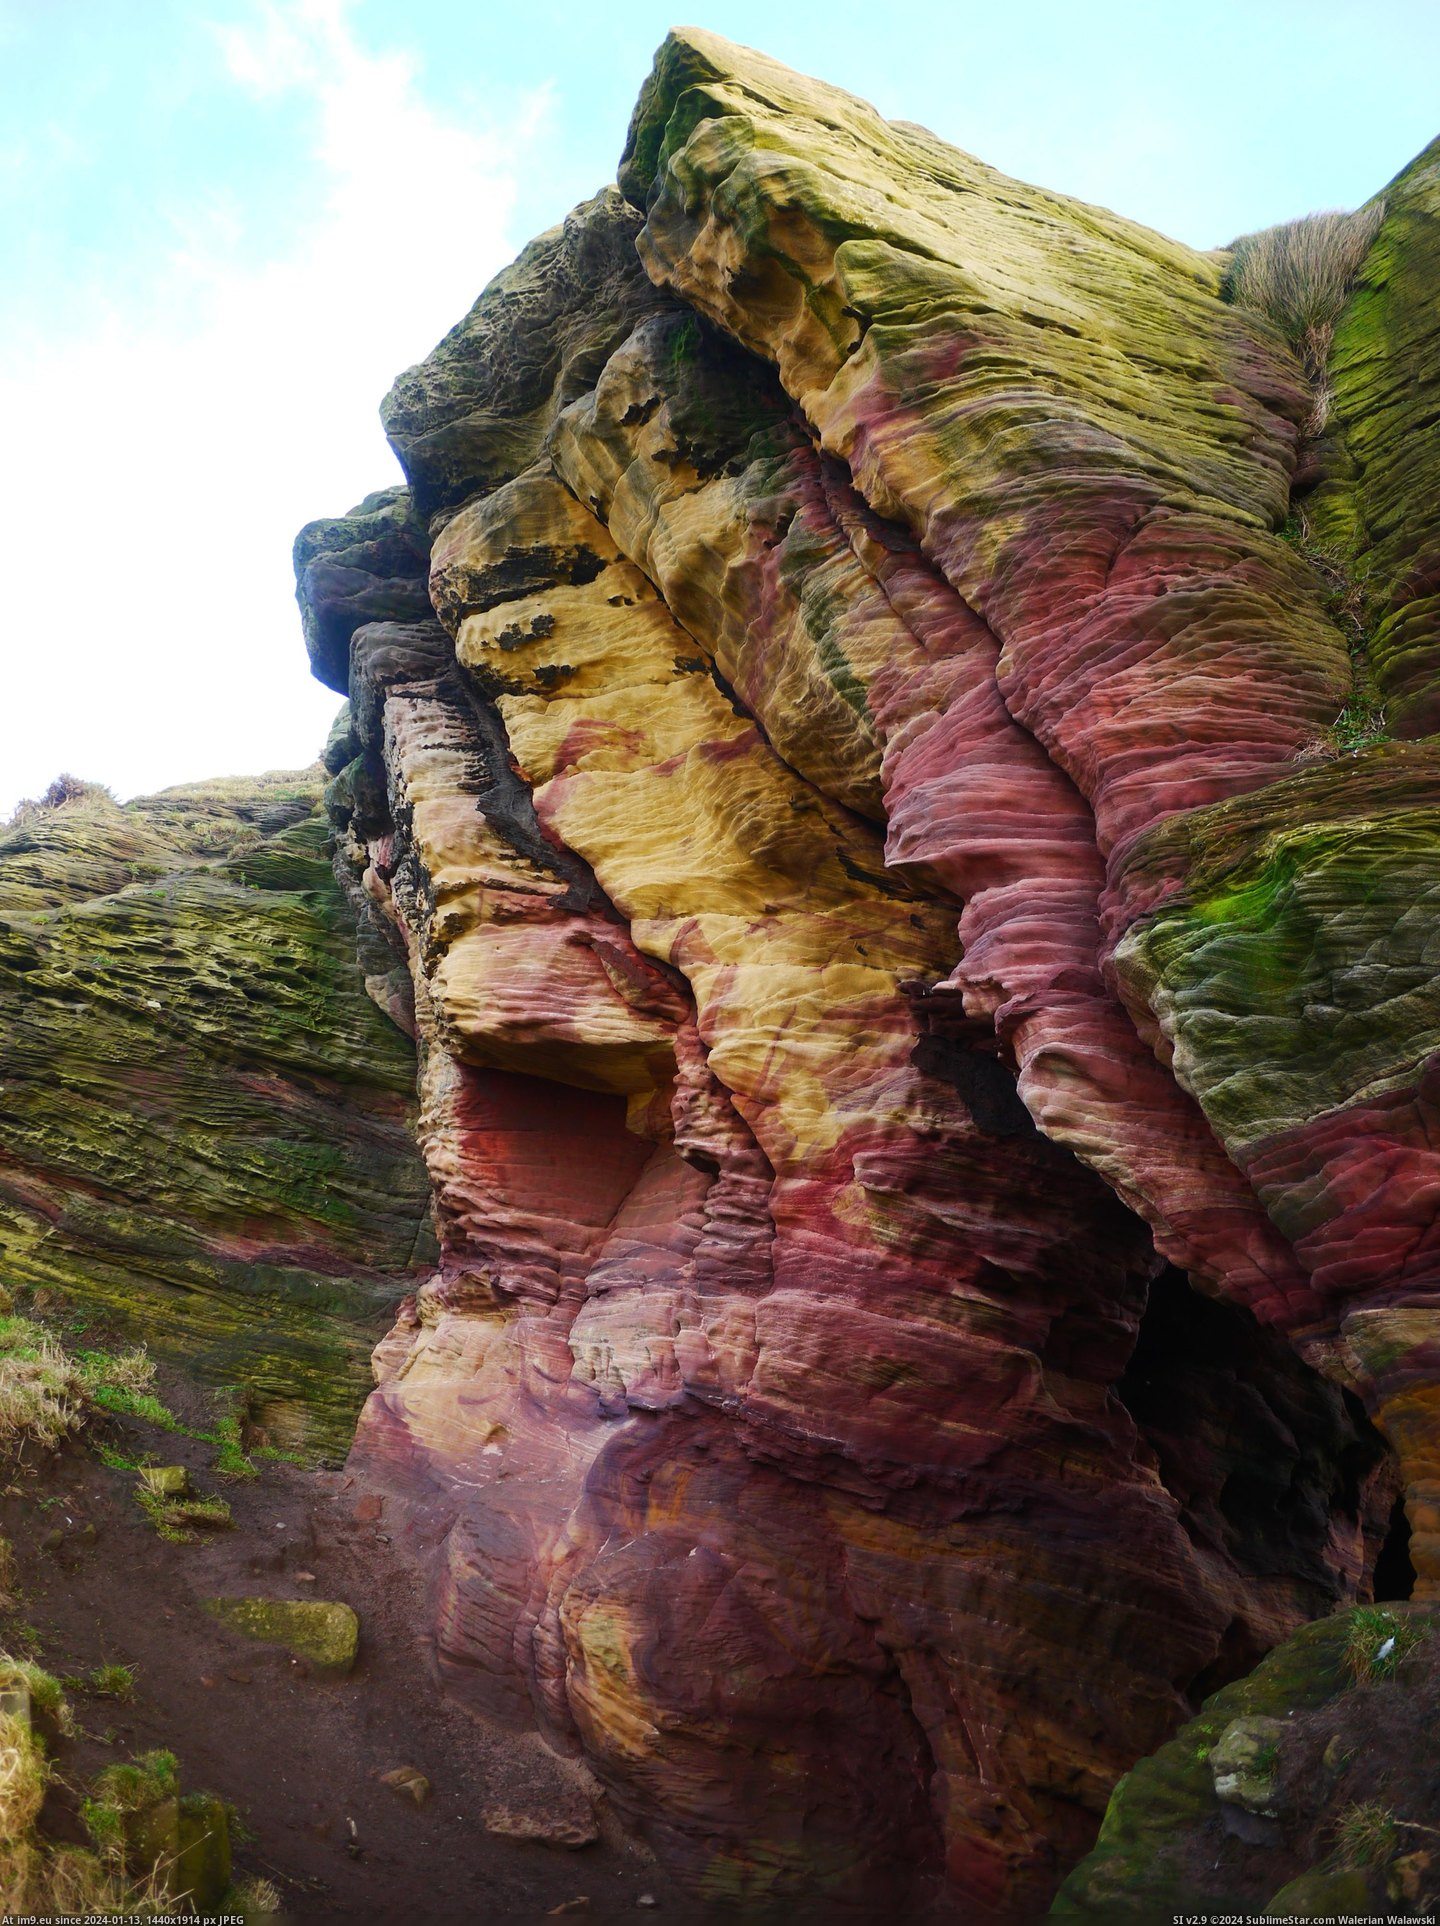 #Rock #Scotland #Anstruther #Colored #Formations [Earthporn] Colored rock formations near Anstruther, Scotland [3,000 x 4,000] [OC] Pic. (Bild von album My r/EARTHPORN favs))